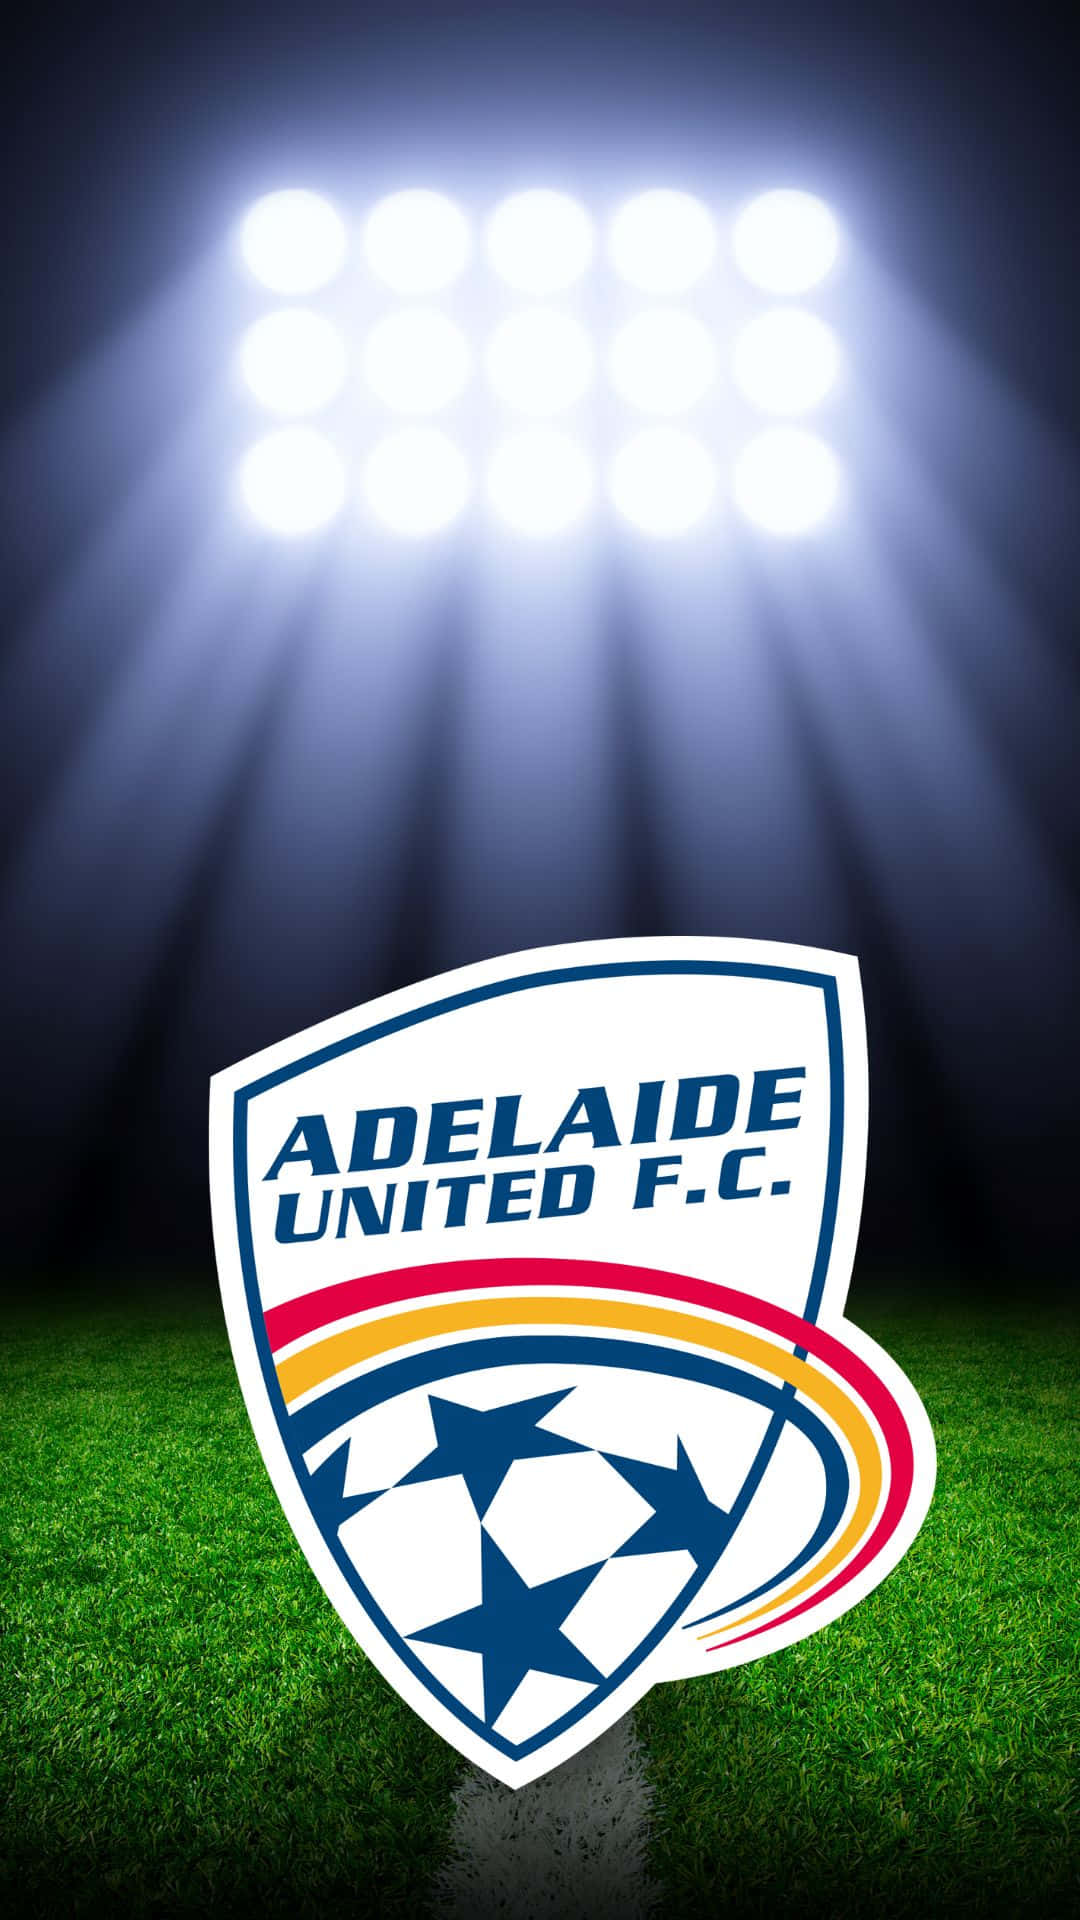 Adelaide United FC - Pride of South Australia Wallpaper